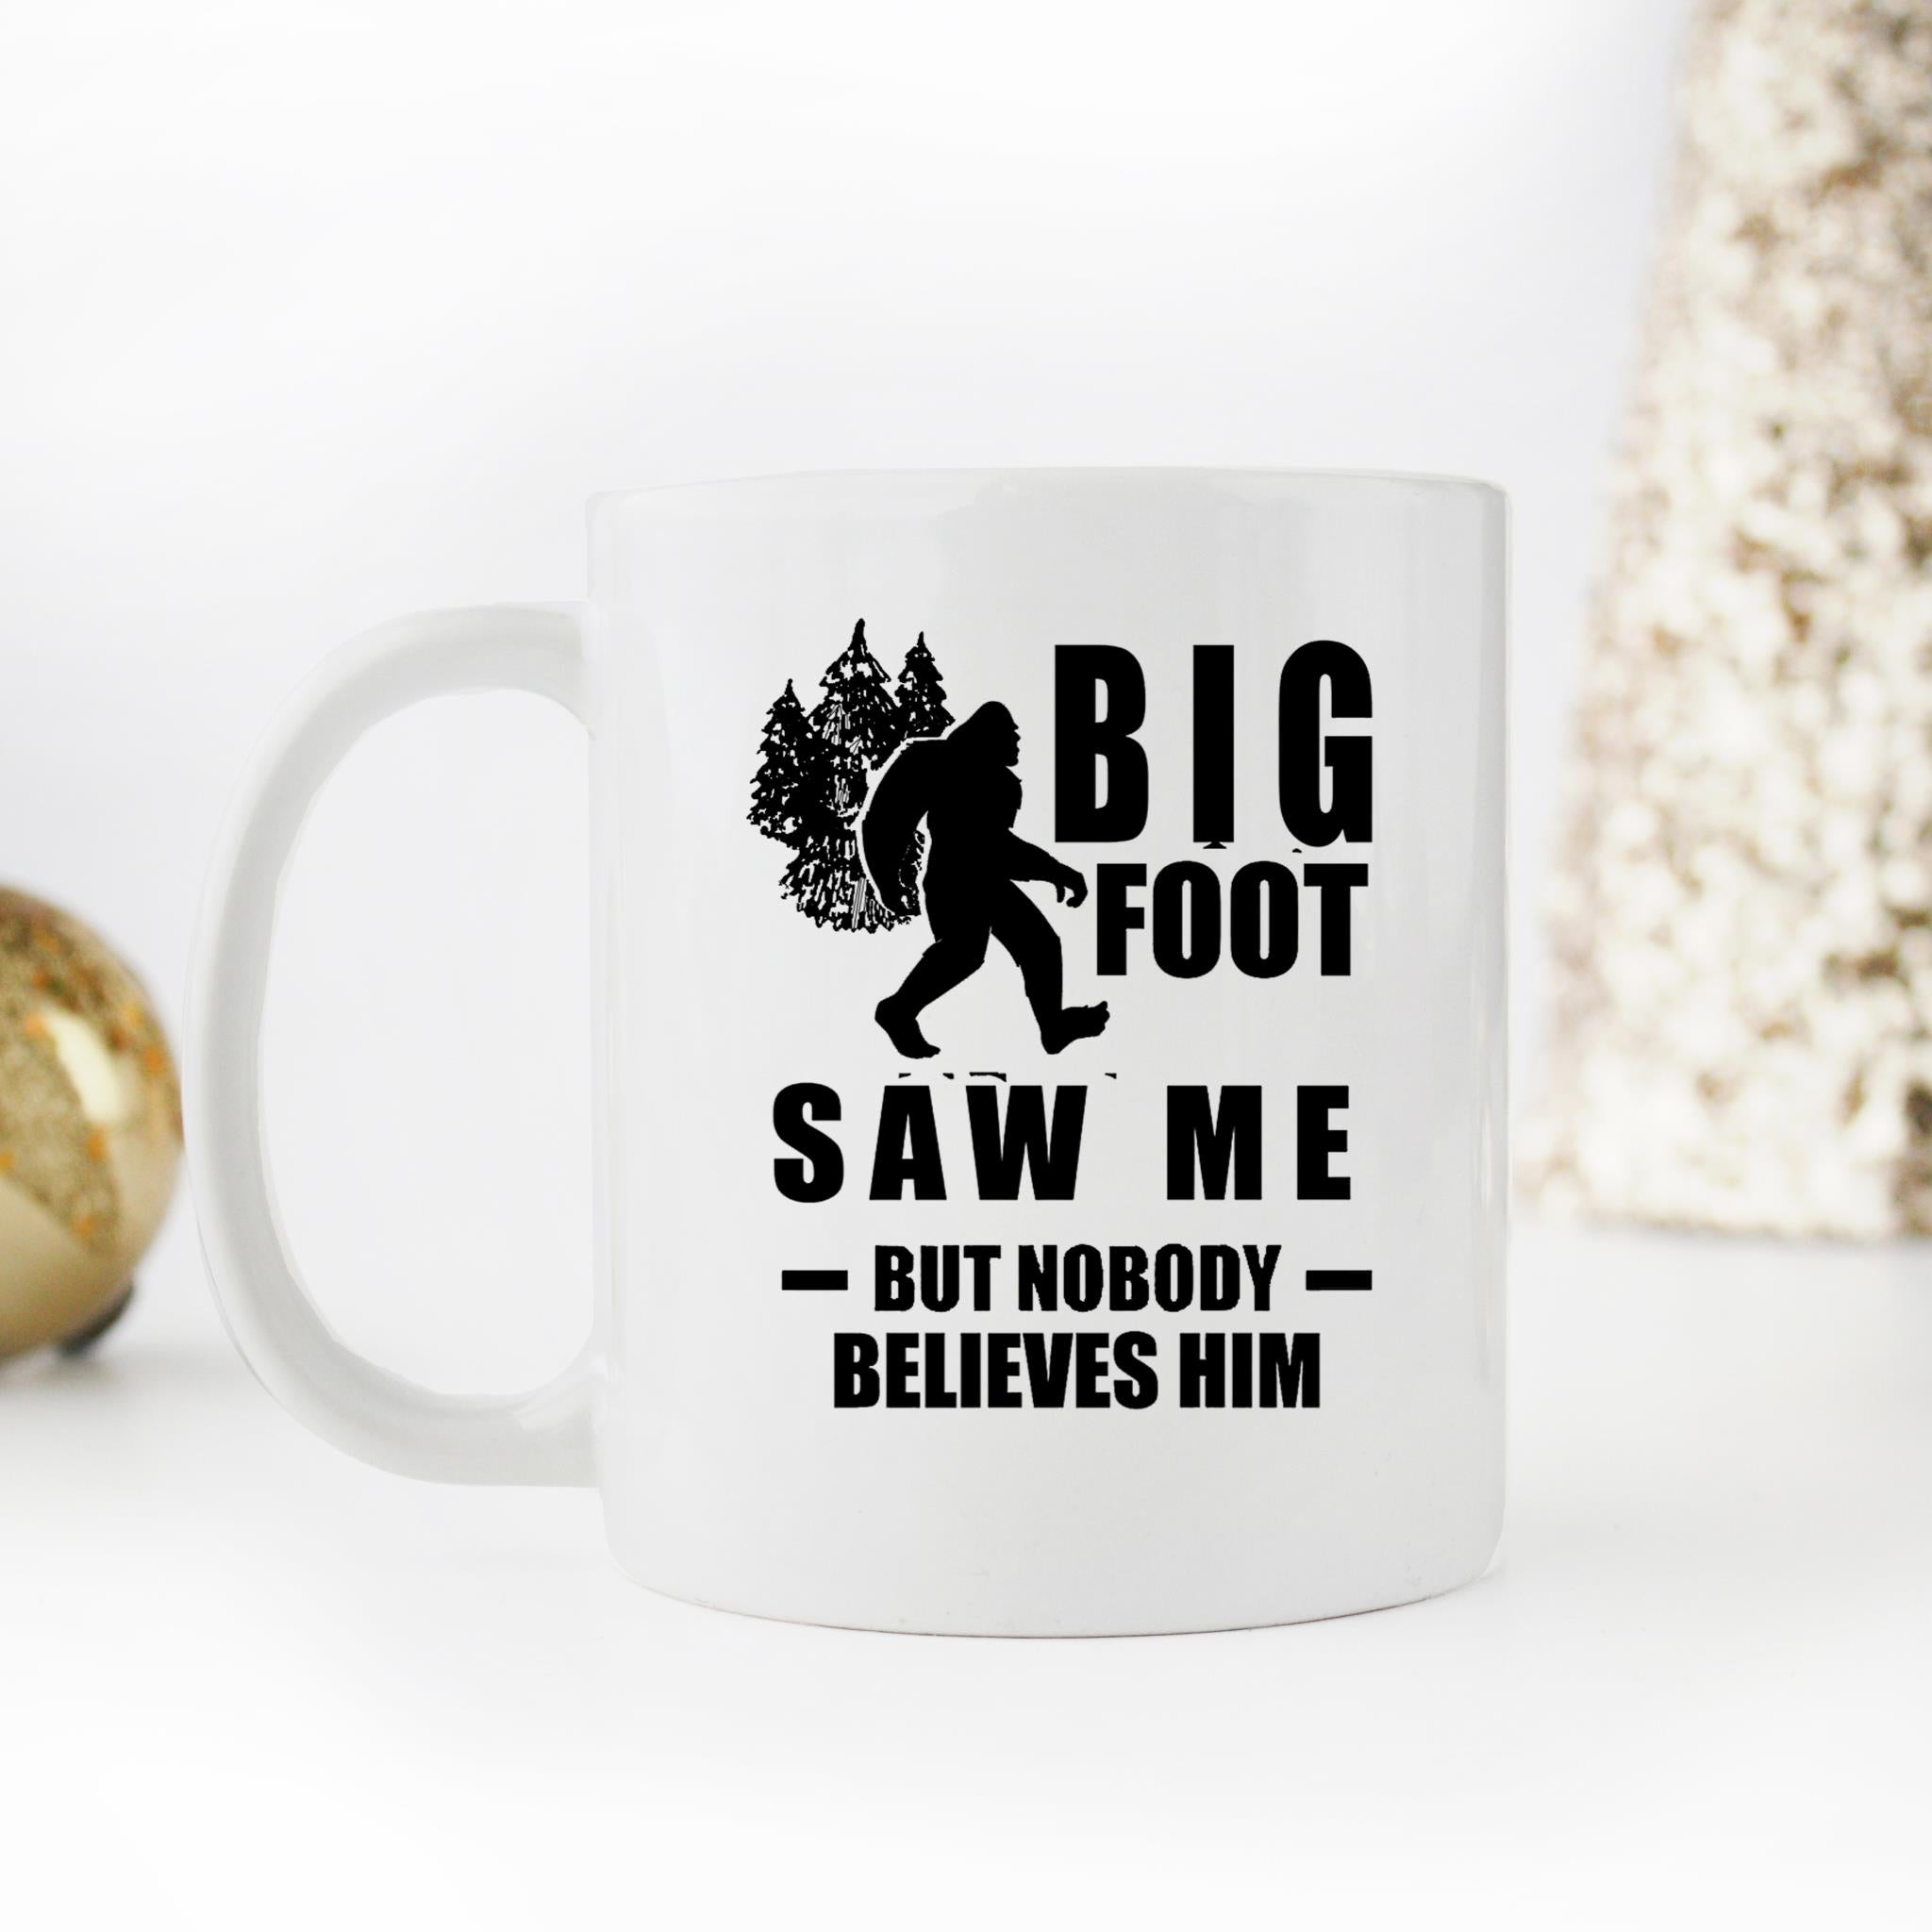 Skitongifts Funny Ceramic Novelty Coffee Mug Bigfoot Saw Me But Nobody Believes Him Funny IxbJLYa